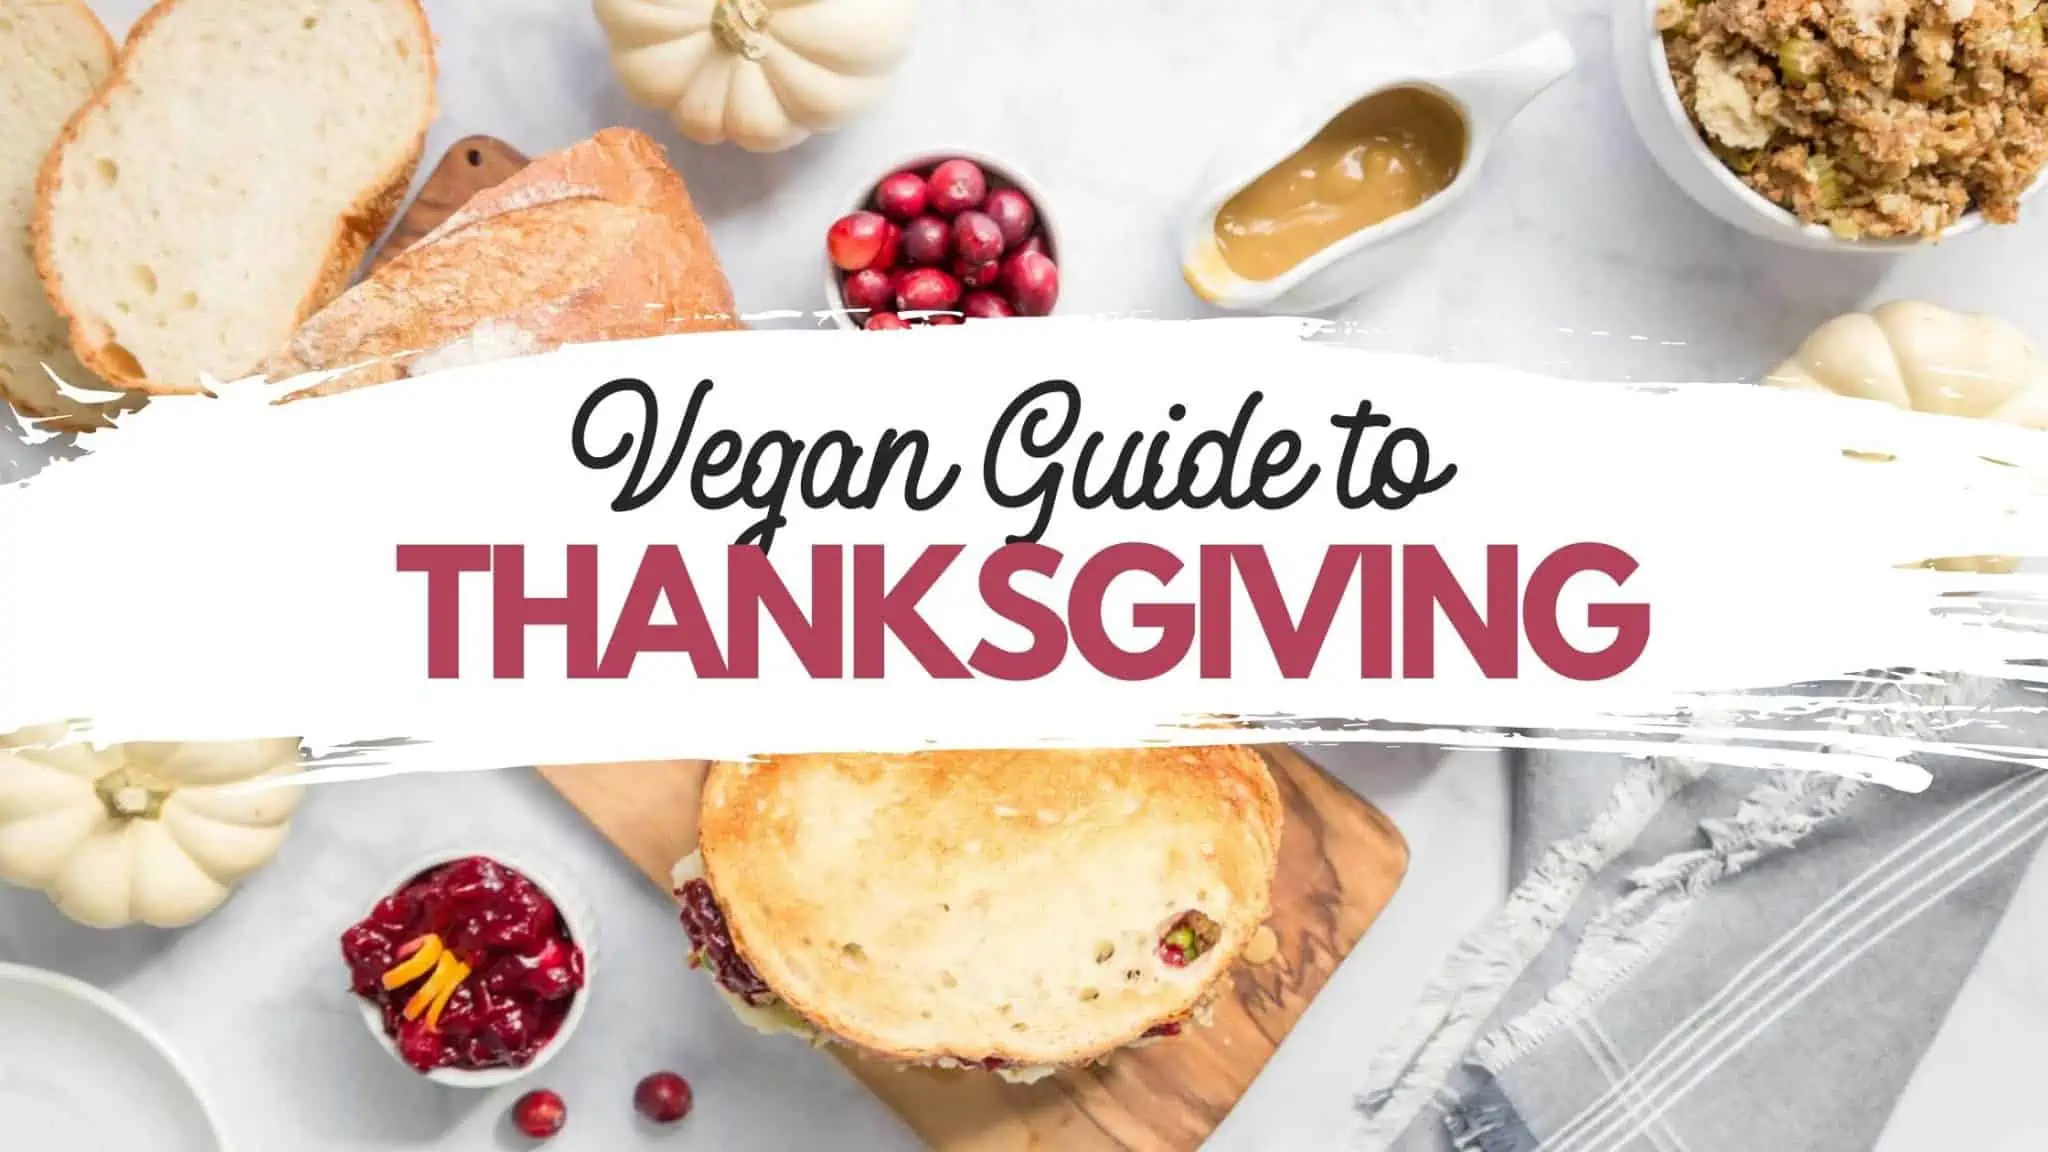 IV. Vegan Thanksgiving Recipe Ideas